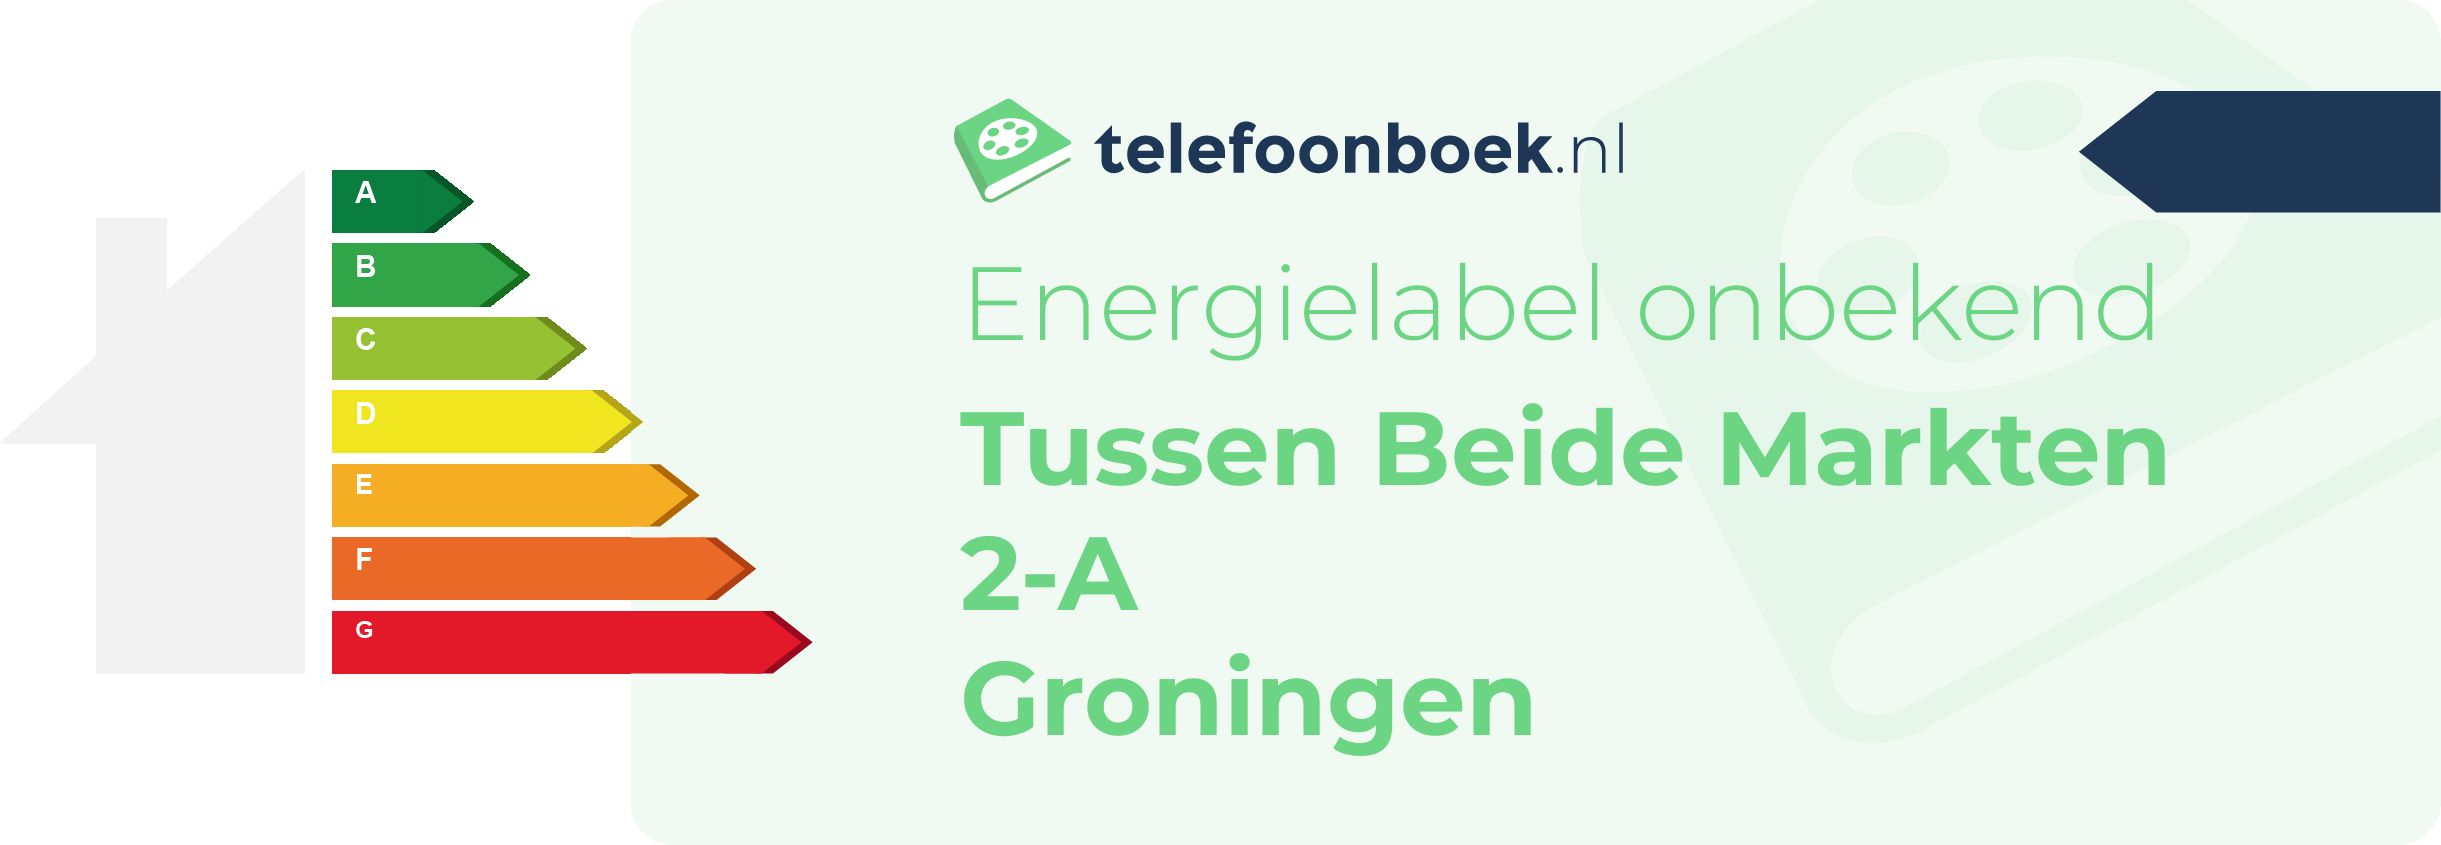 Energielabel Tussen Beide Markten 2-A Groningen